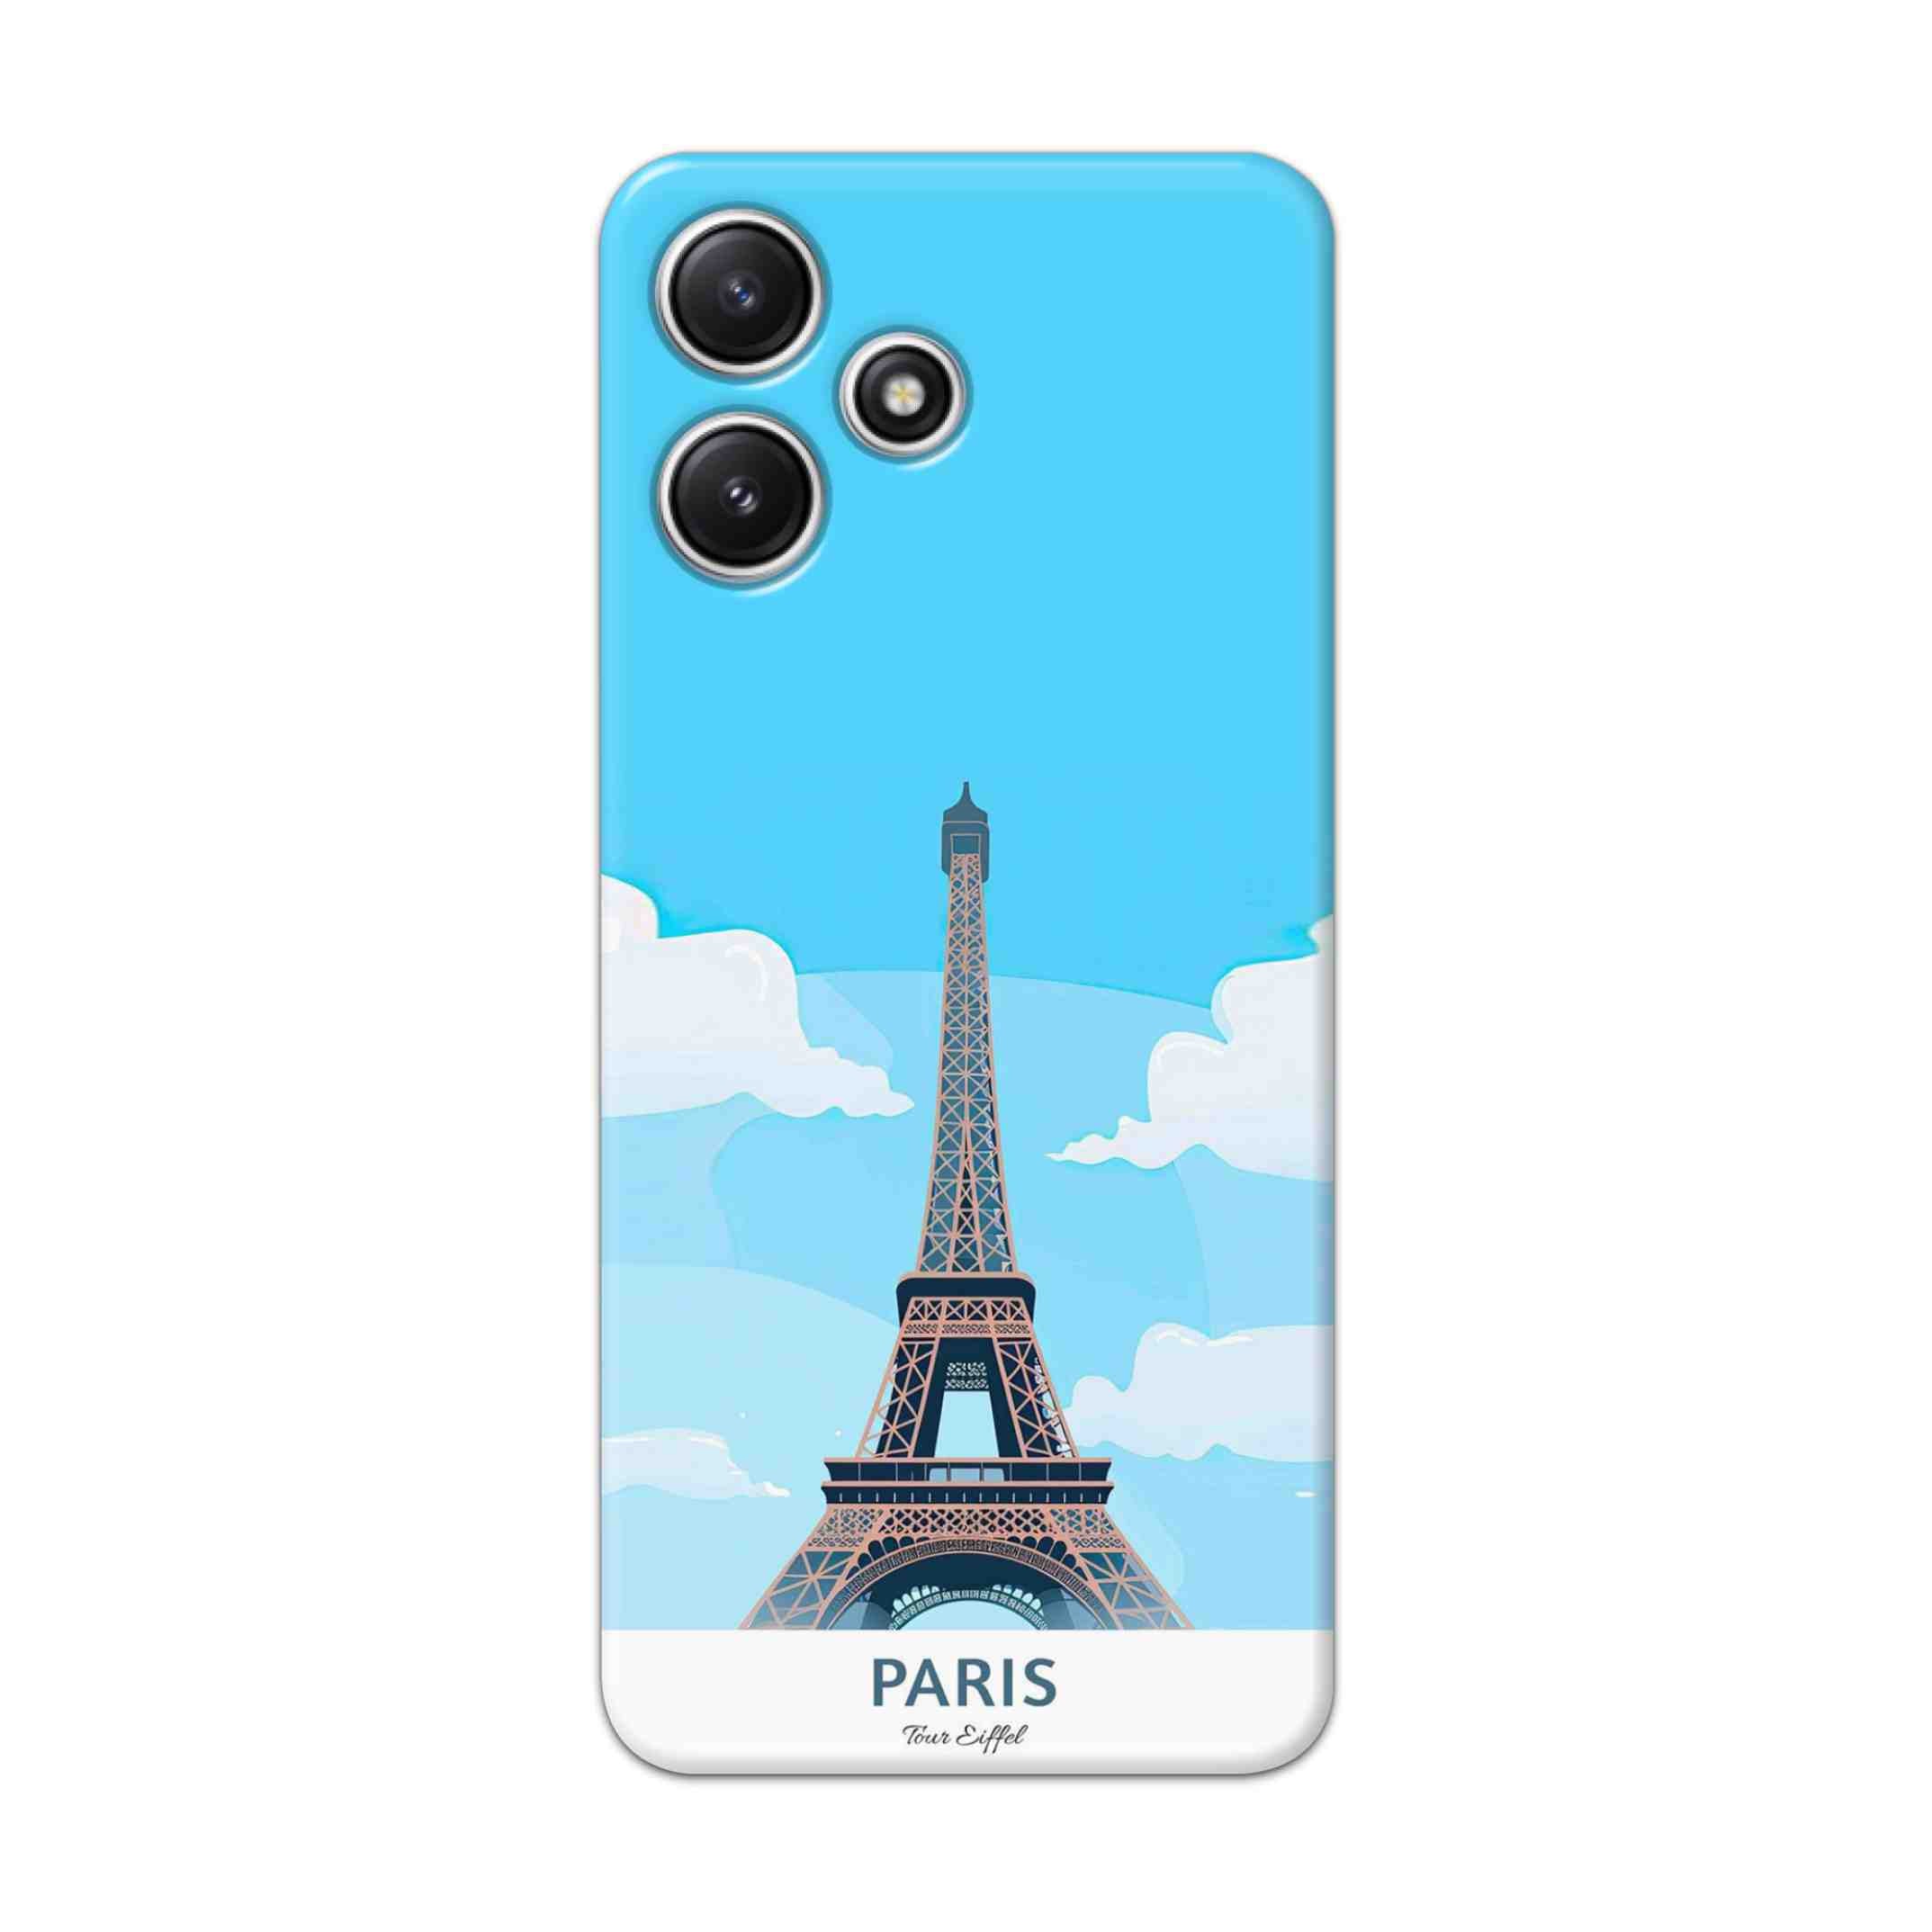 Buy Paris Hard Back Mobile Phone Case/Cover For Redmi 12 5G Online